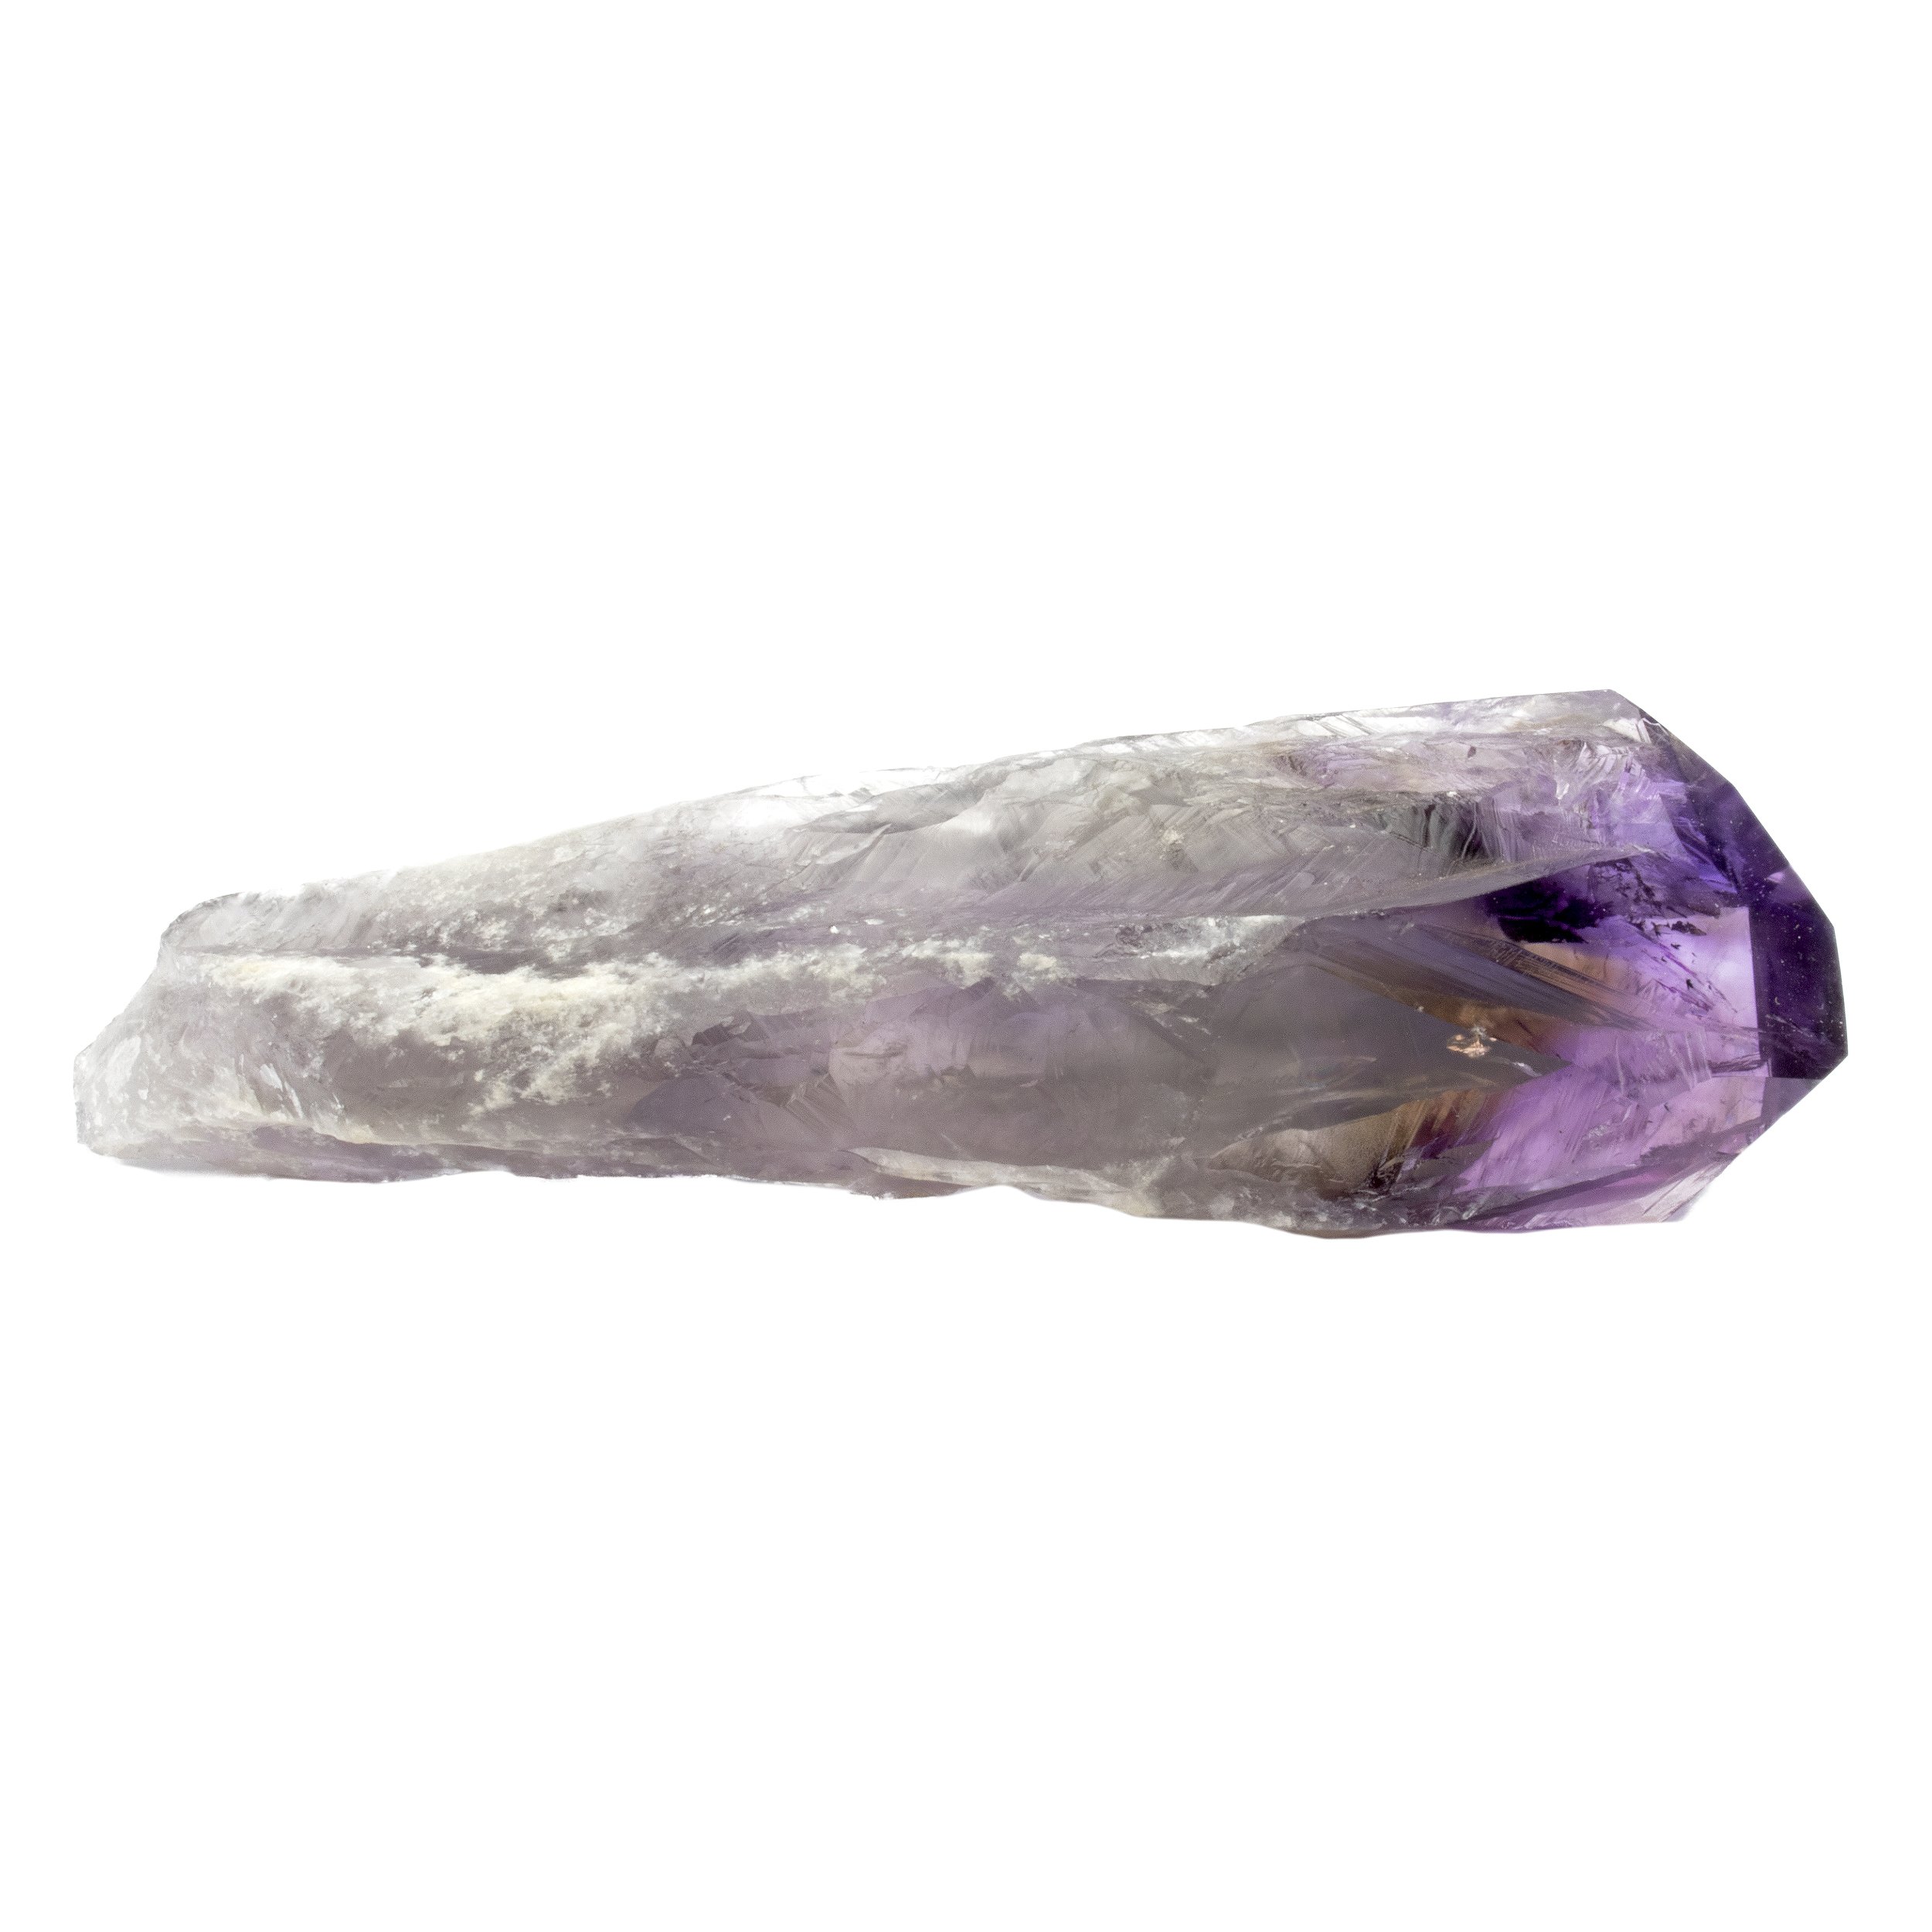 Bahia Amethyst Crystal -Large With Phantoms